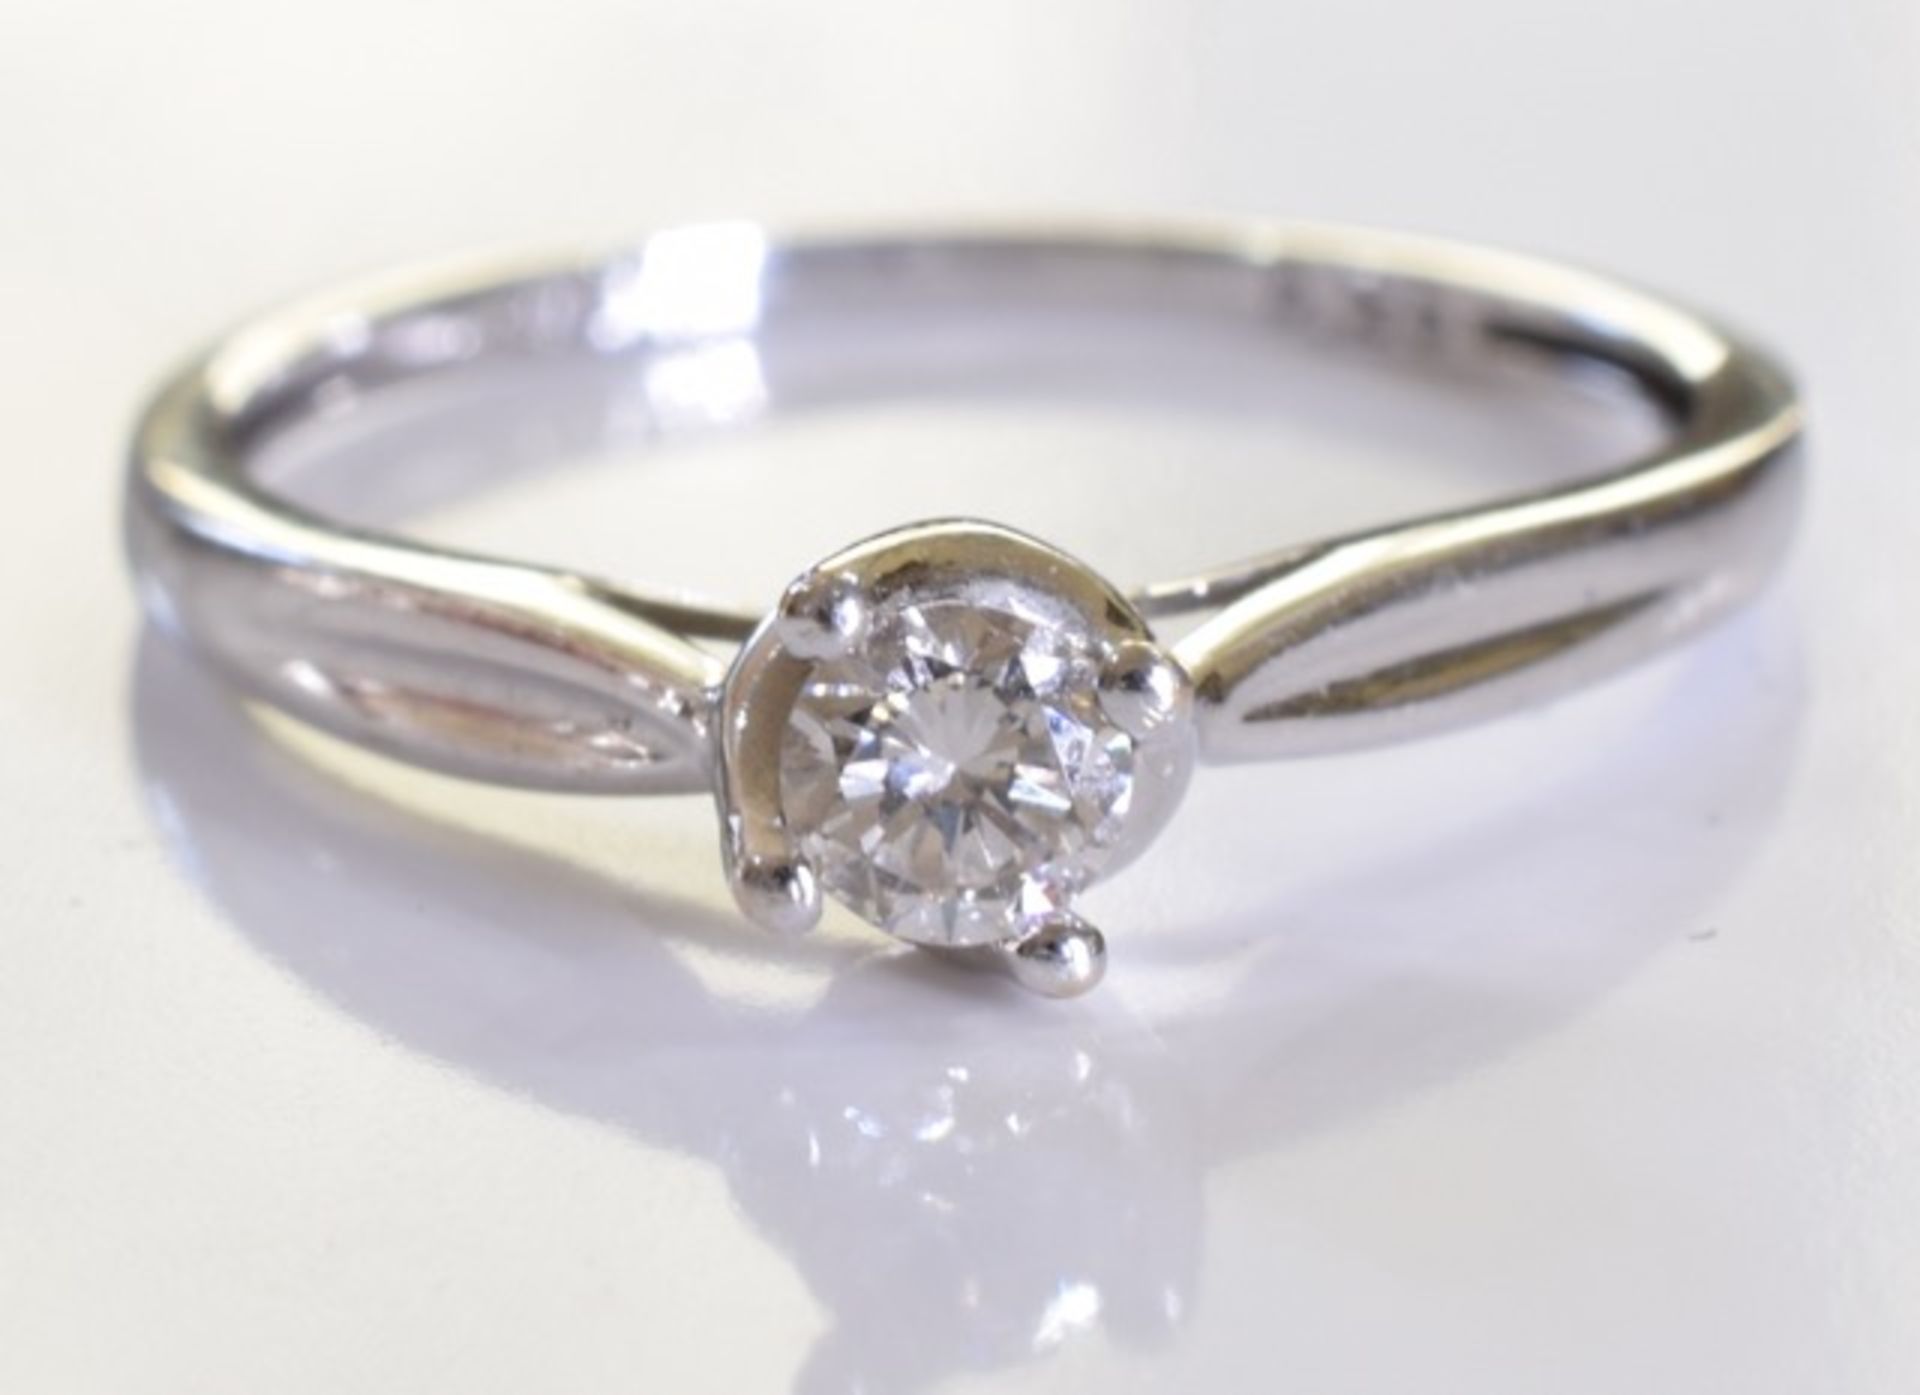 A brilliant cut single round diamond ring set in 9ct white gold.